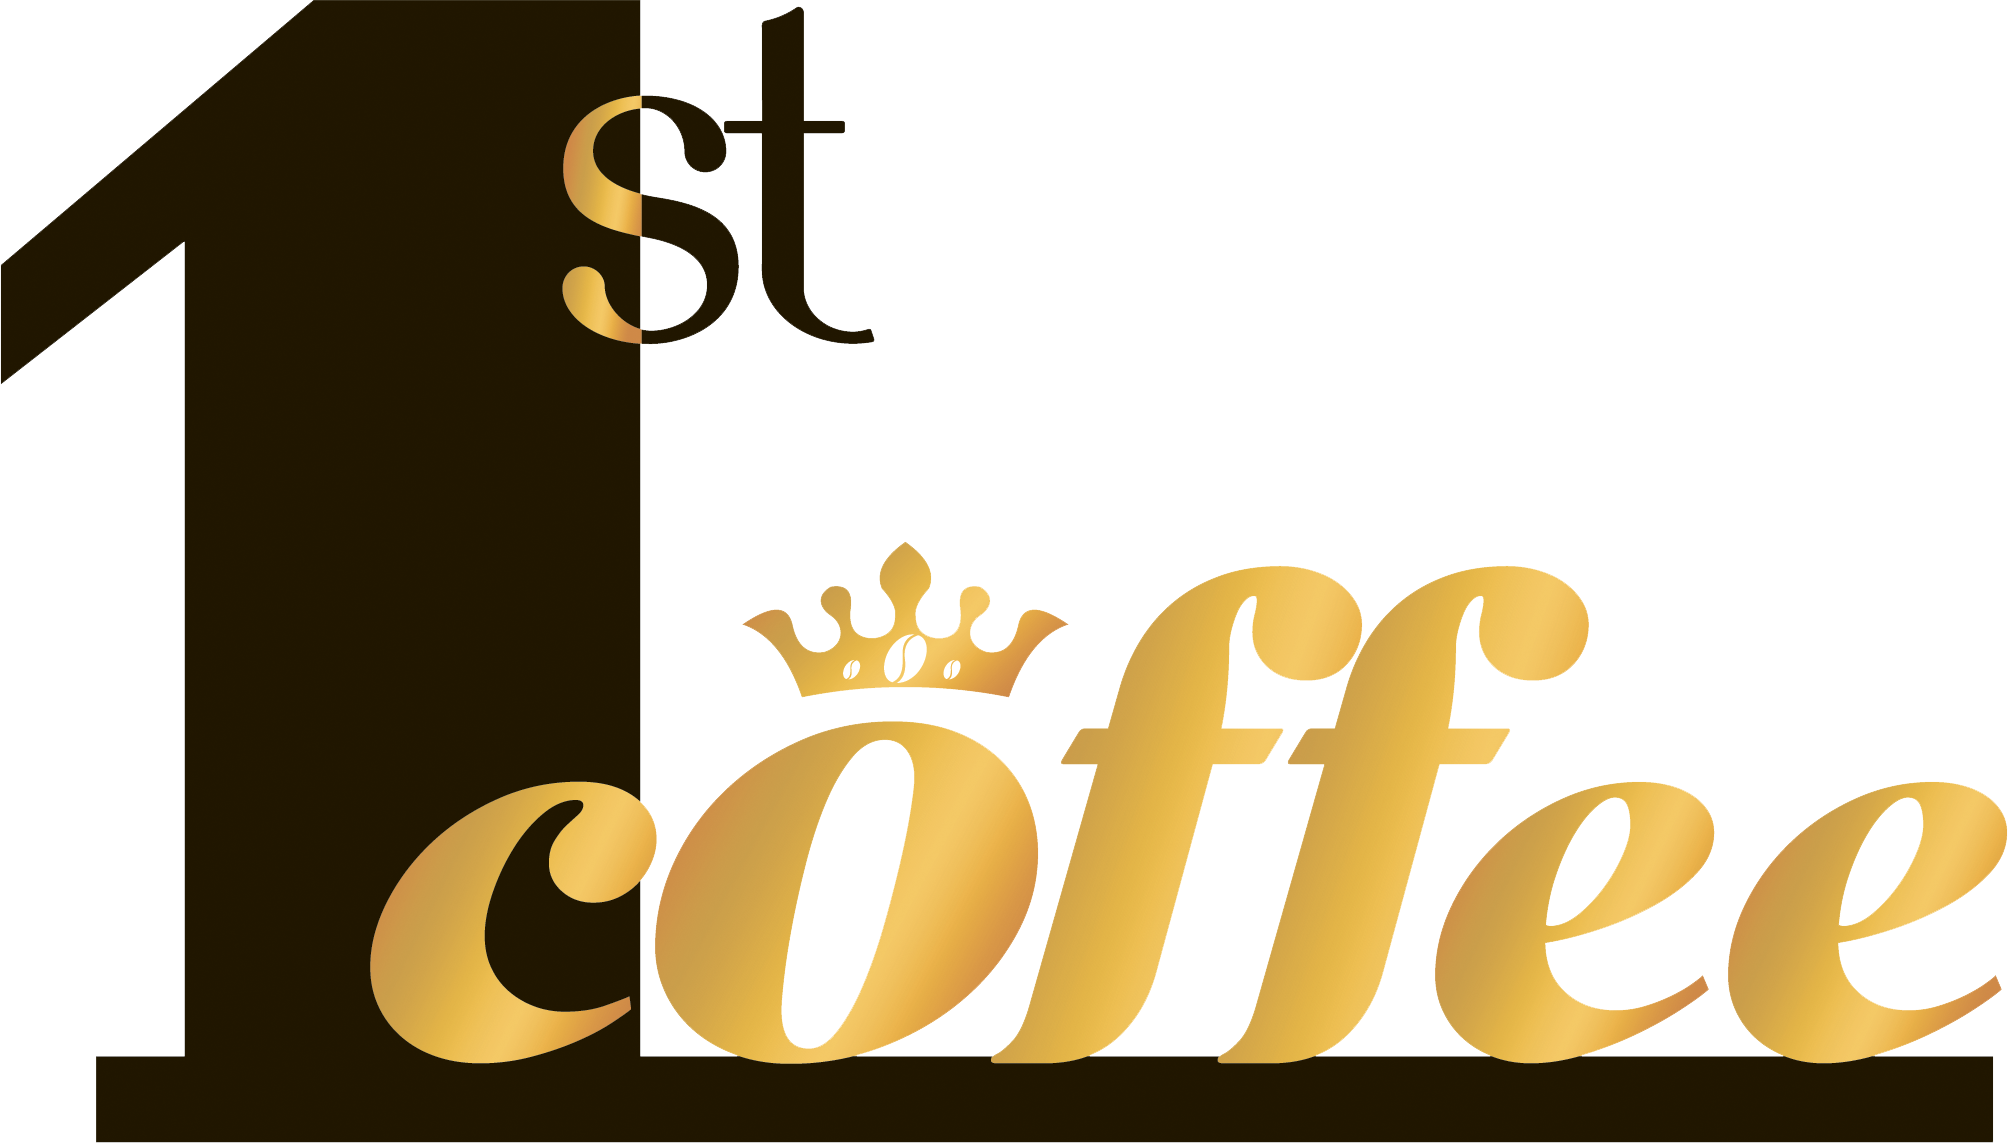 1st COFFEE